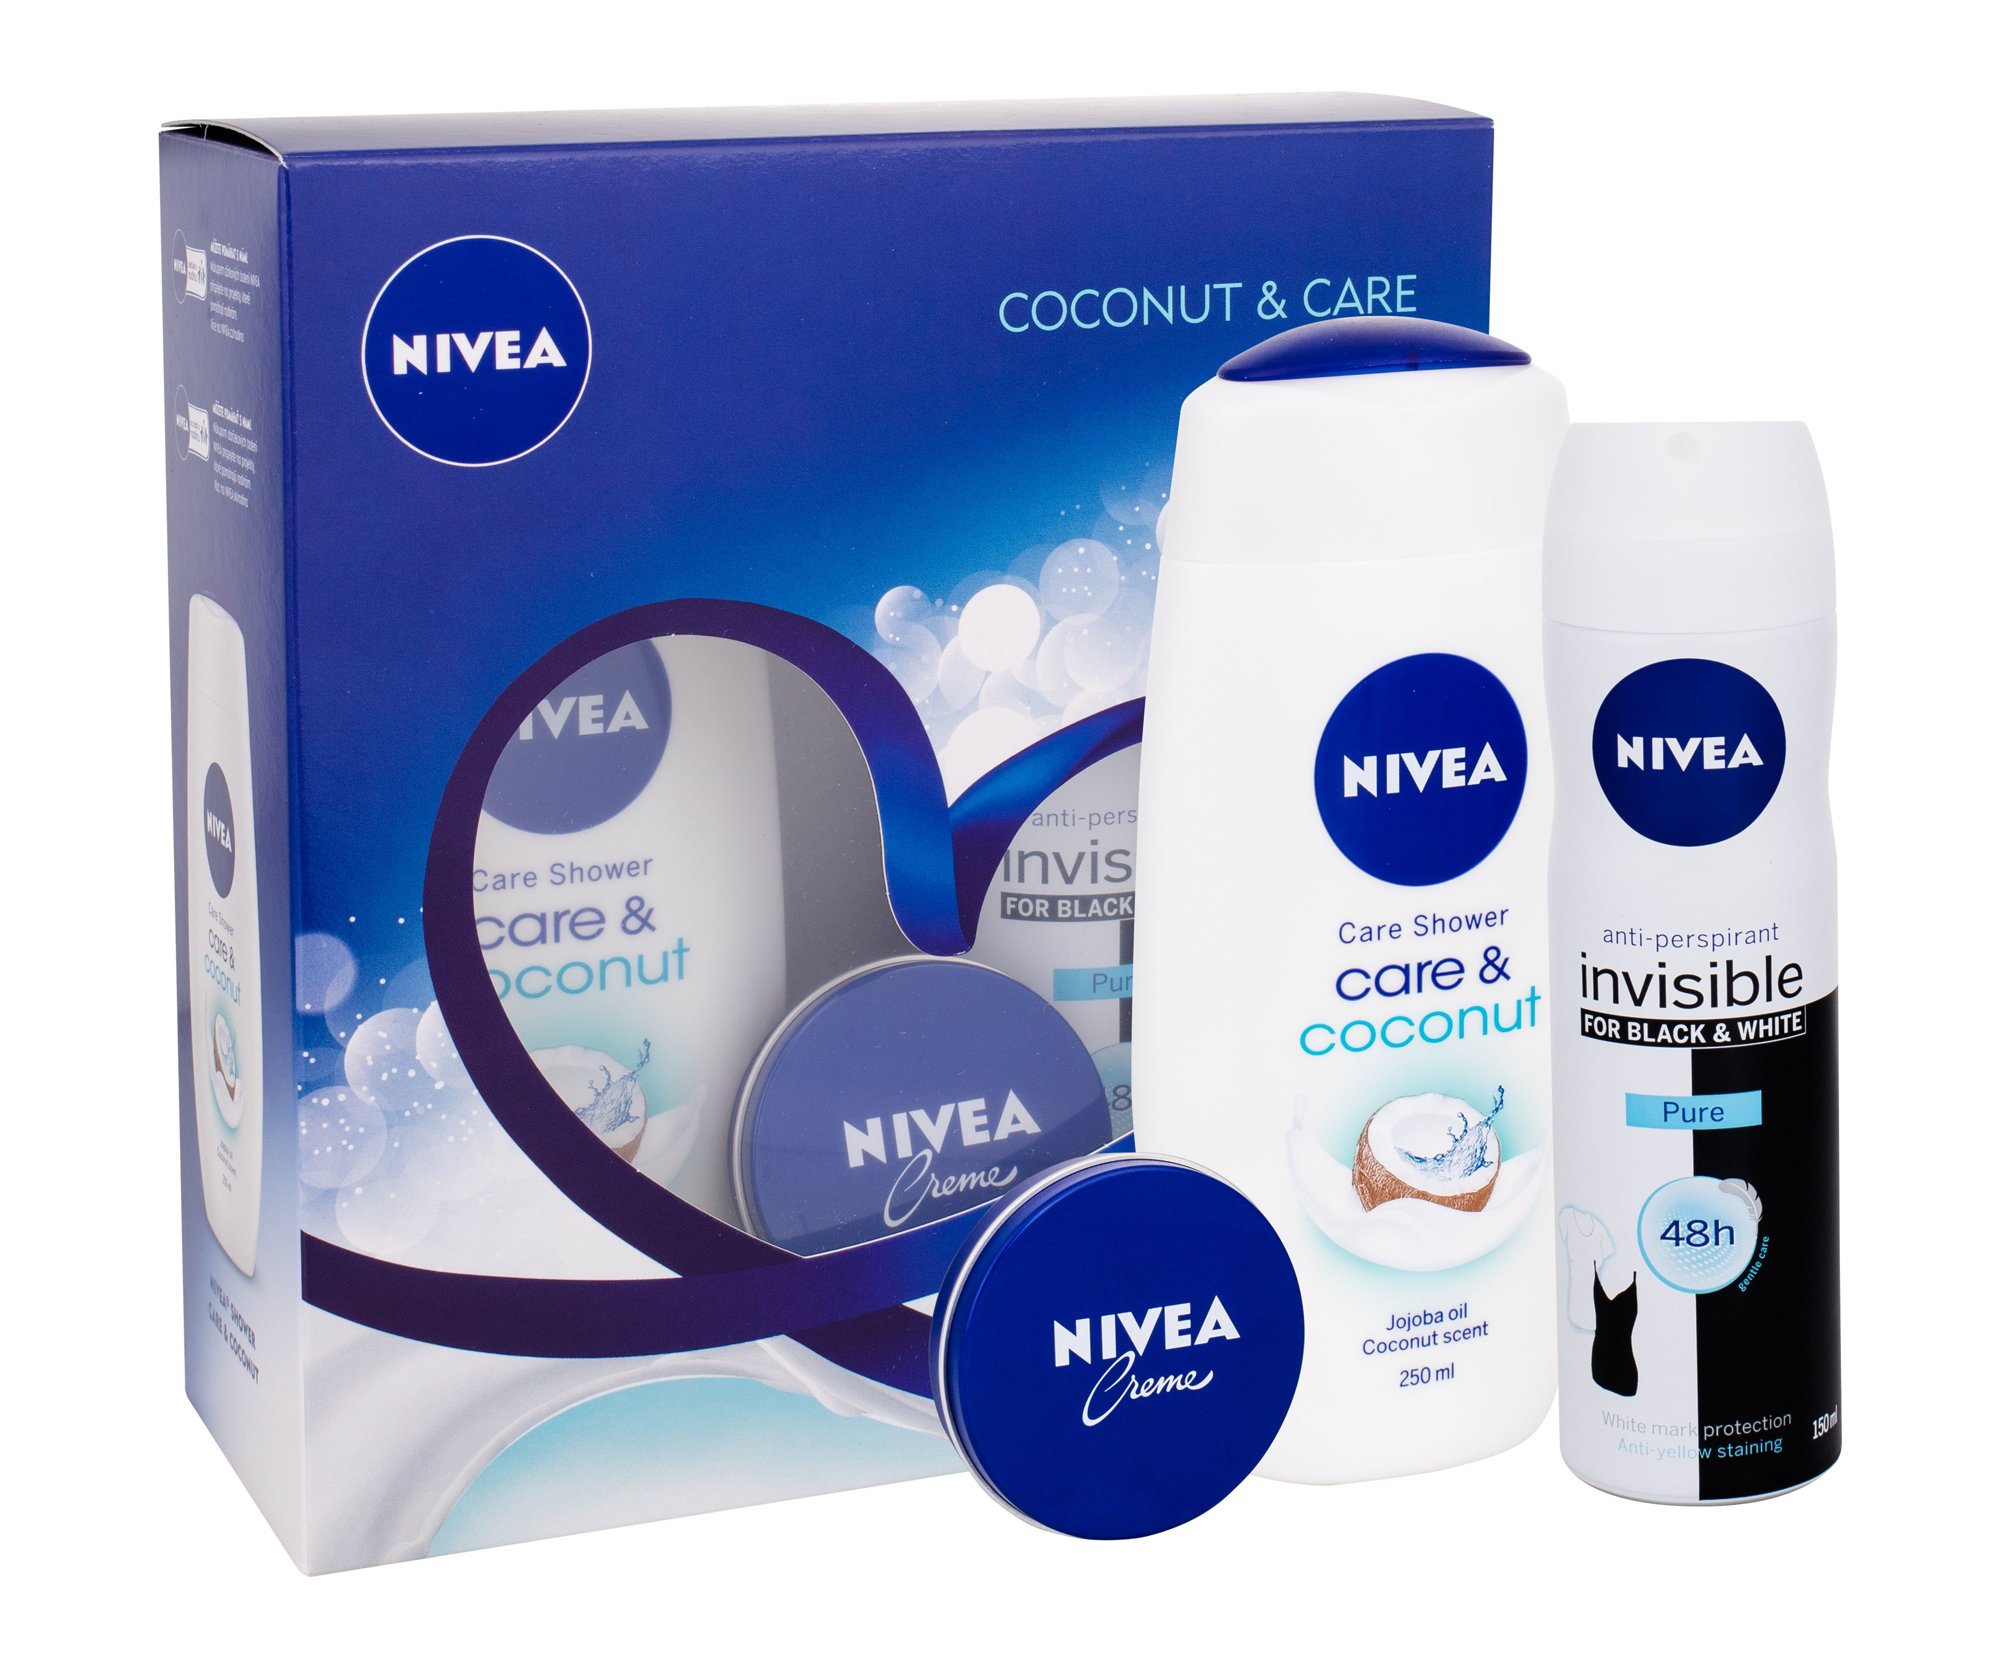 Nivea Care & Coconut 250ml Shower Gel Care & Coconut 250 ml + Anti-perspirant Invisible For Black & White Pure 150 ml + Nivea Creme 30 ml dušo želė Rinkinys